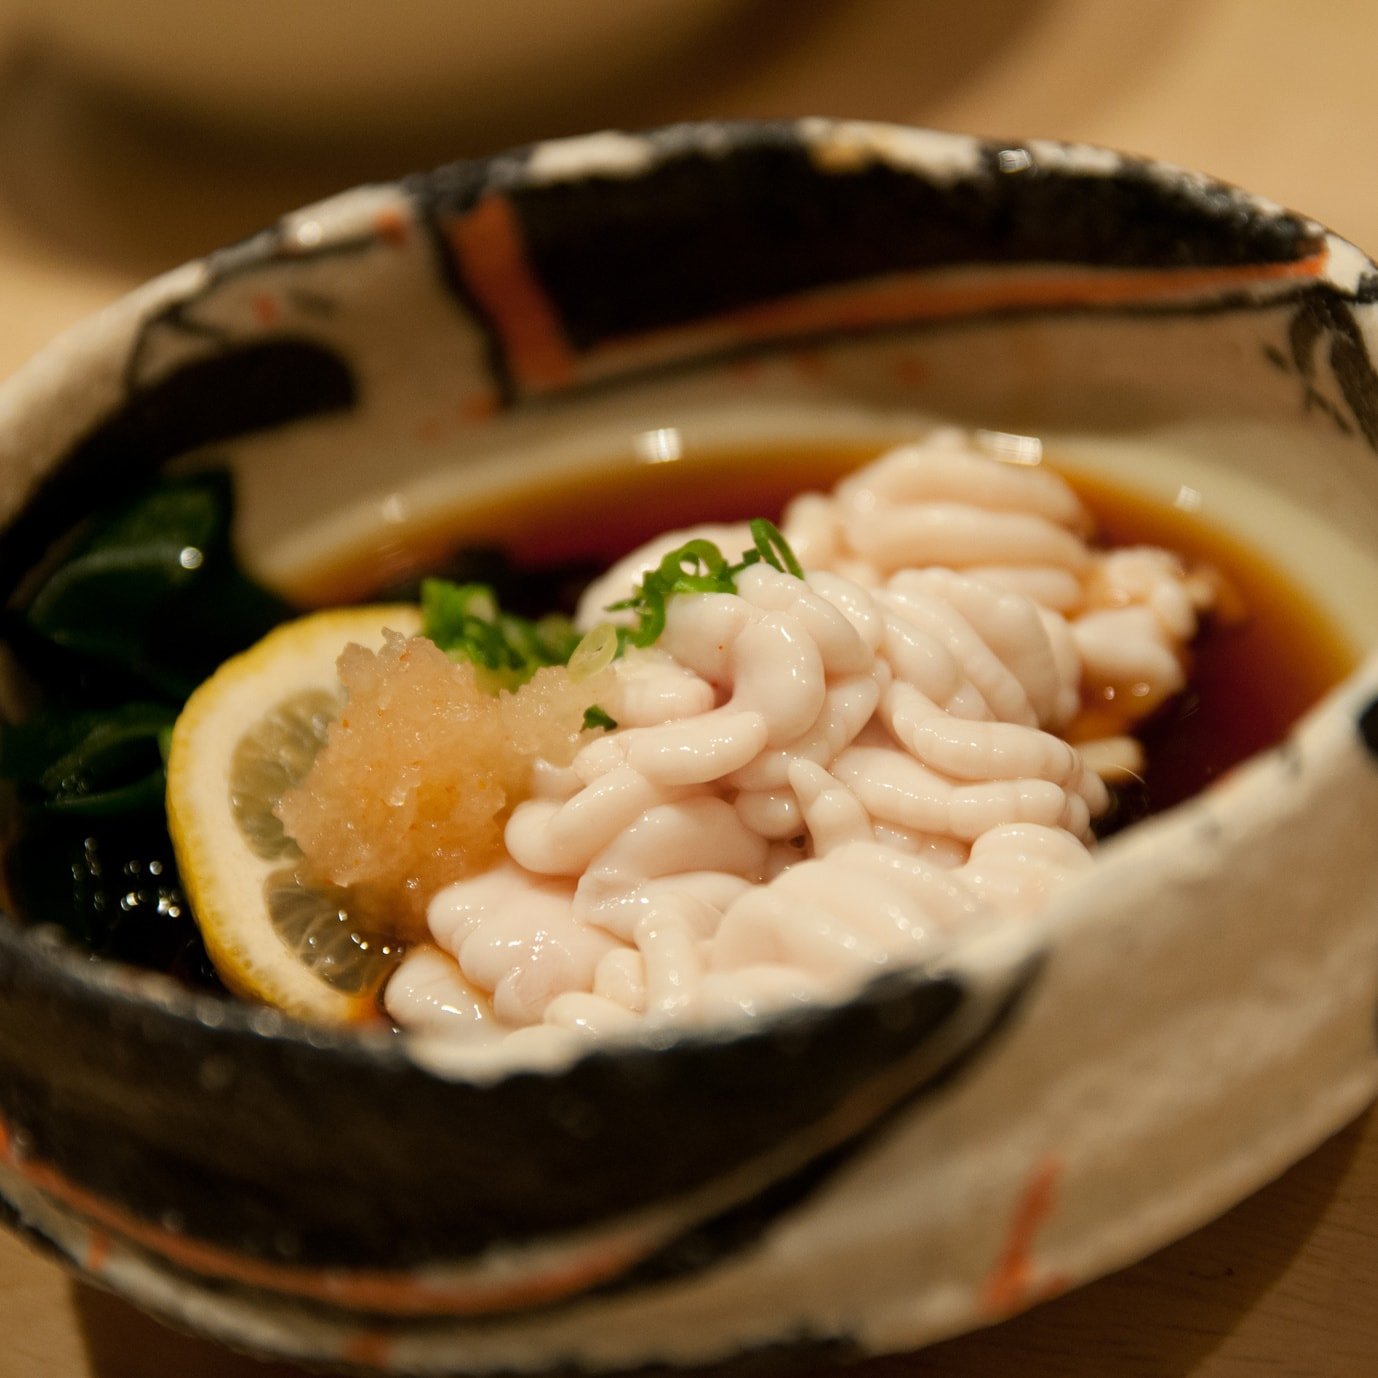 O que  a comida japonesa que surpreende os estrangeiros? Apresentando comida exclusiva do Jap?o! _ Sub 4.jpg